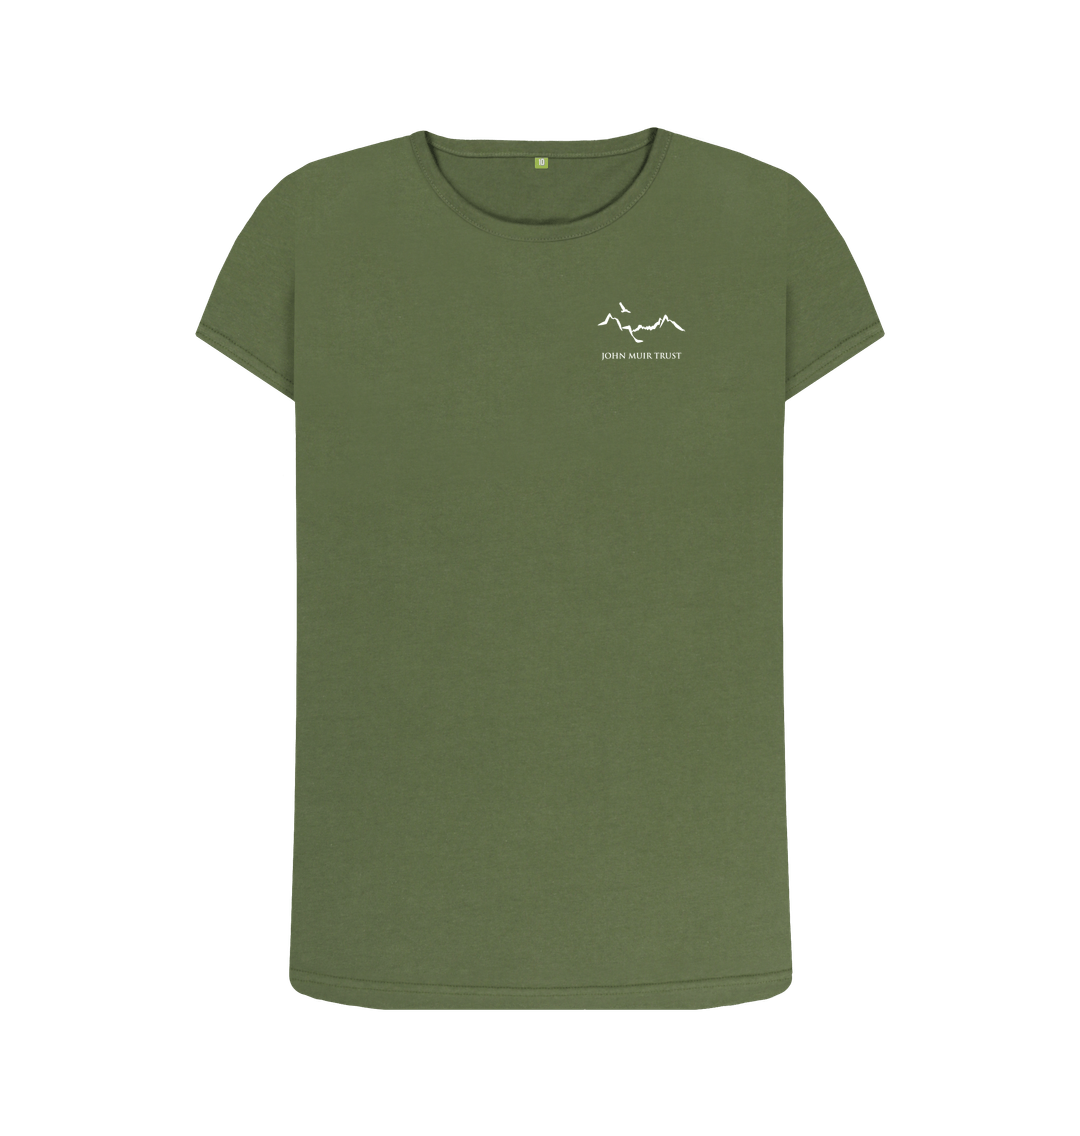 Sandwood Women's T-Shirt - Winter